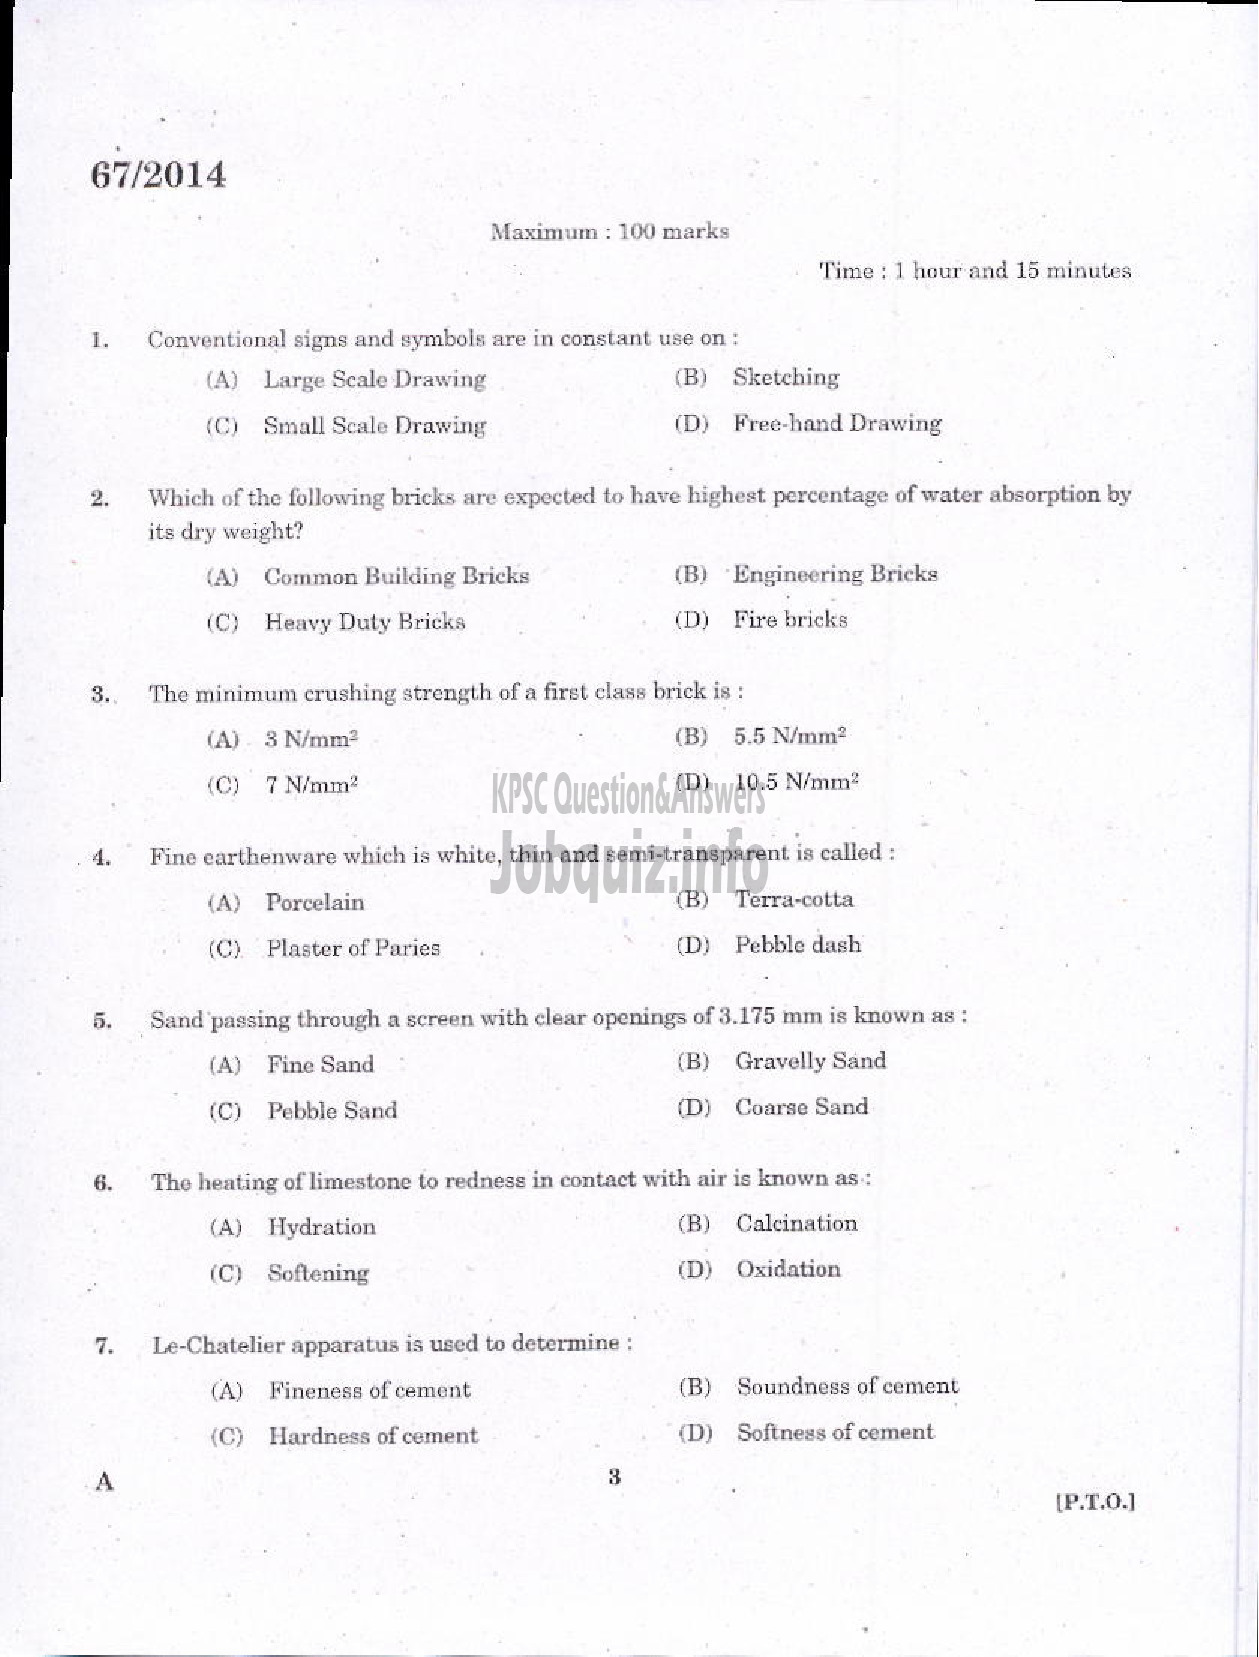 Kerala PSC Question Paper - II GRADE DRAFTSMAN OVERSEER CIVIL PUBLIC WORKS IRRIGATION-1